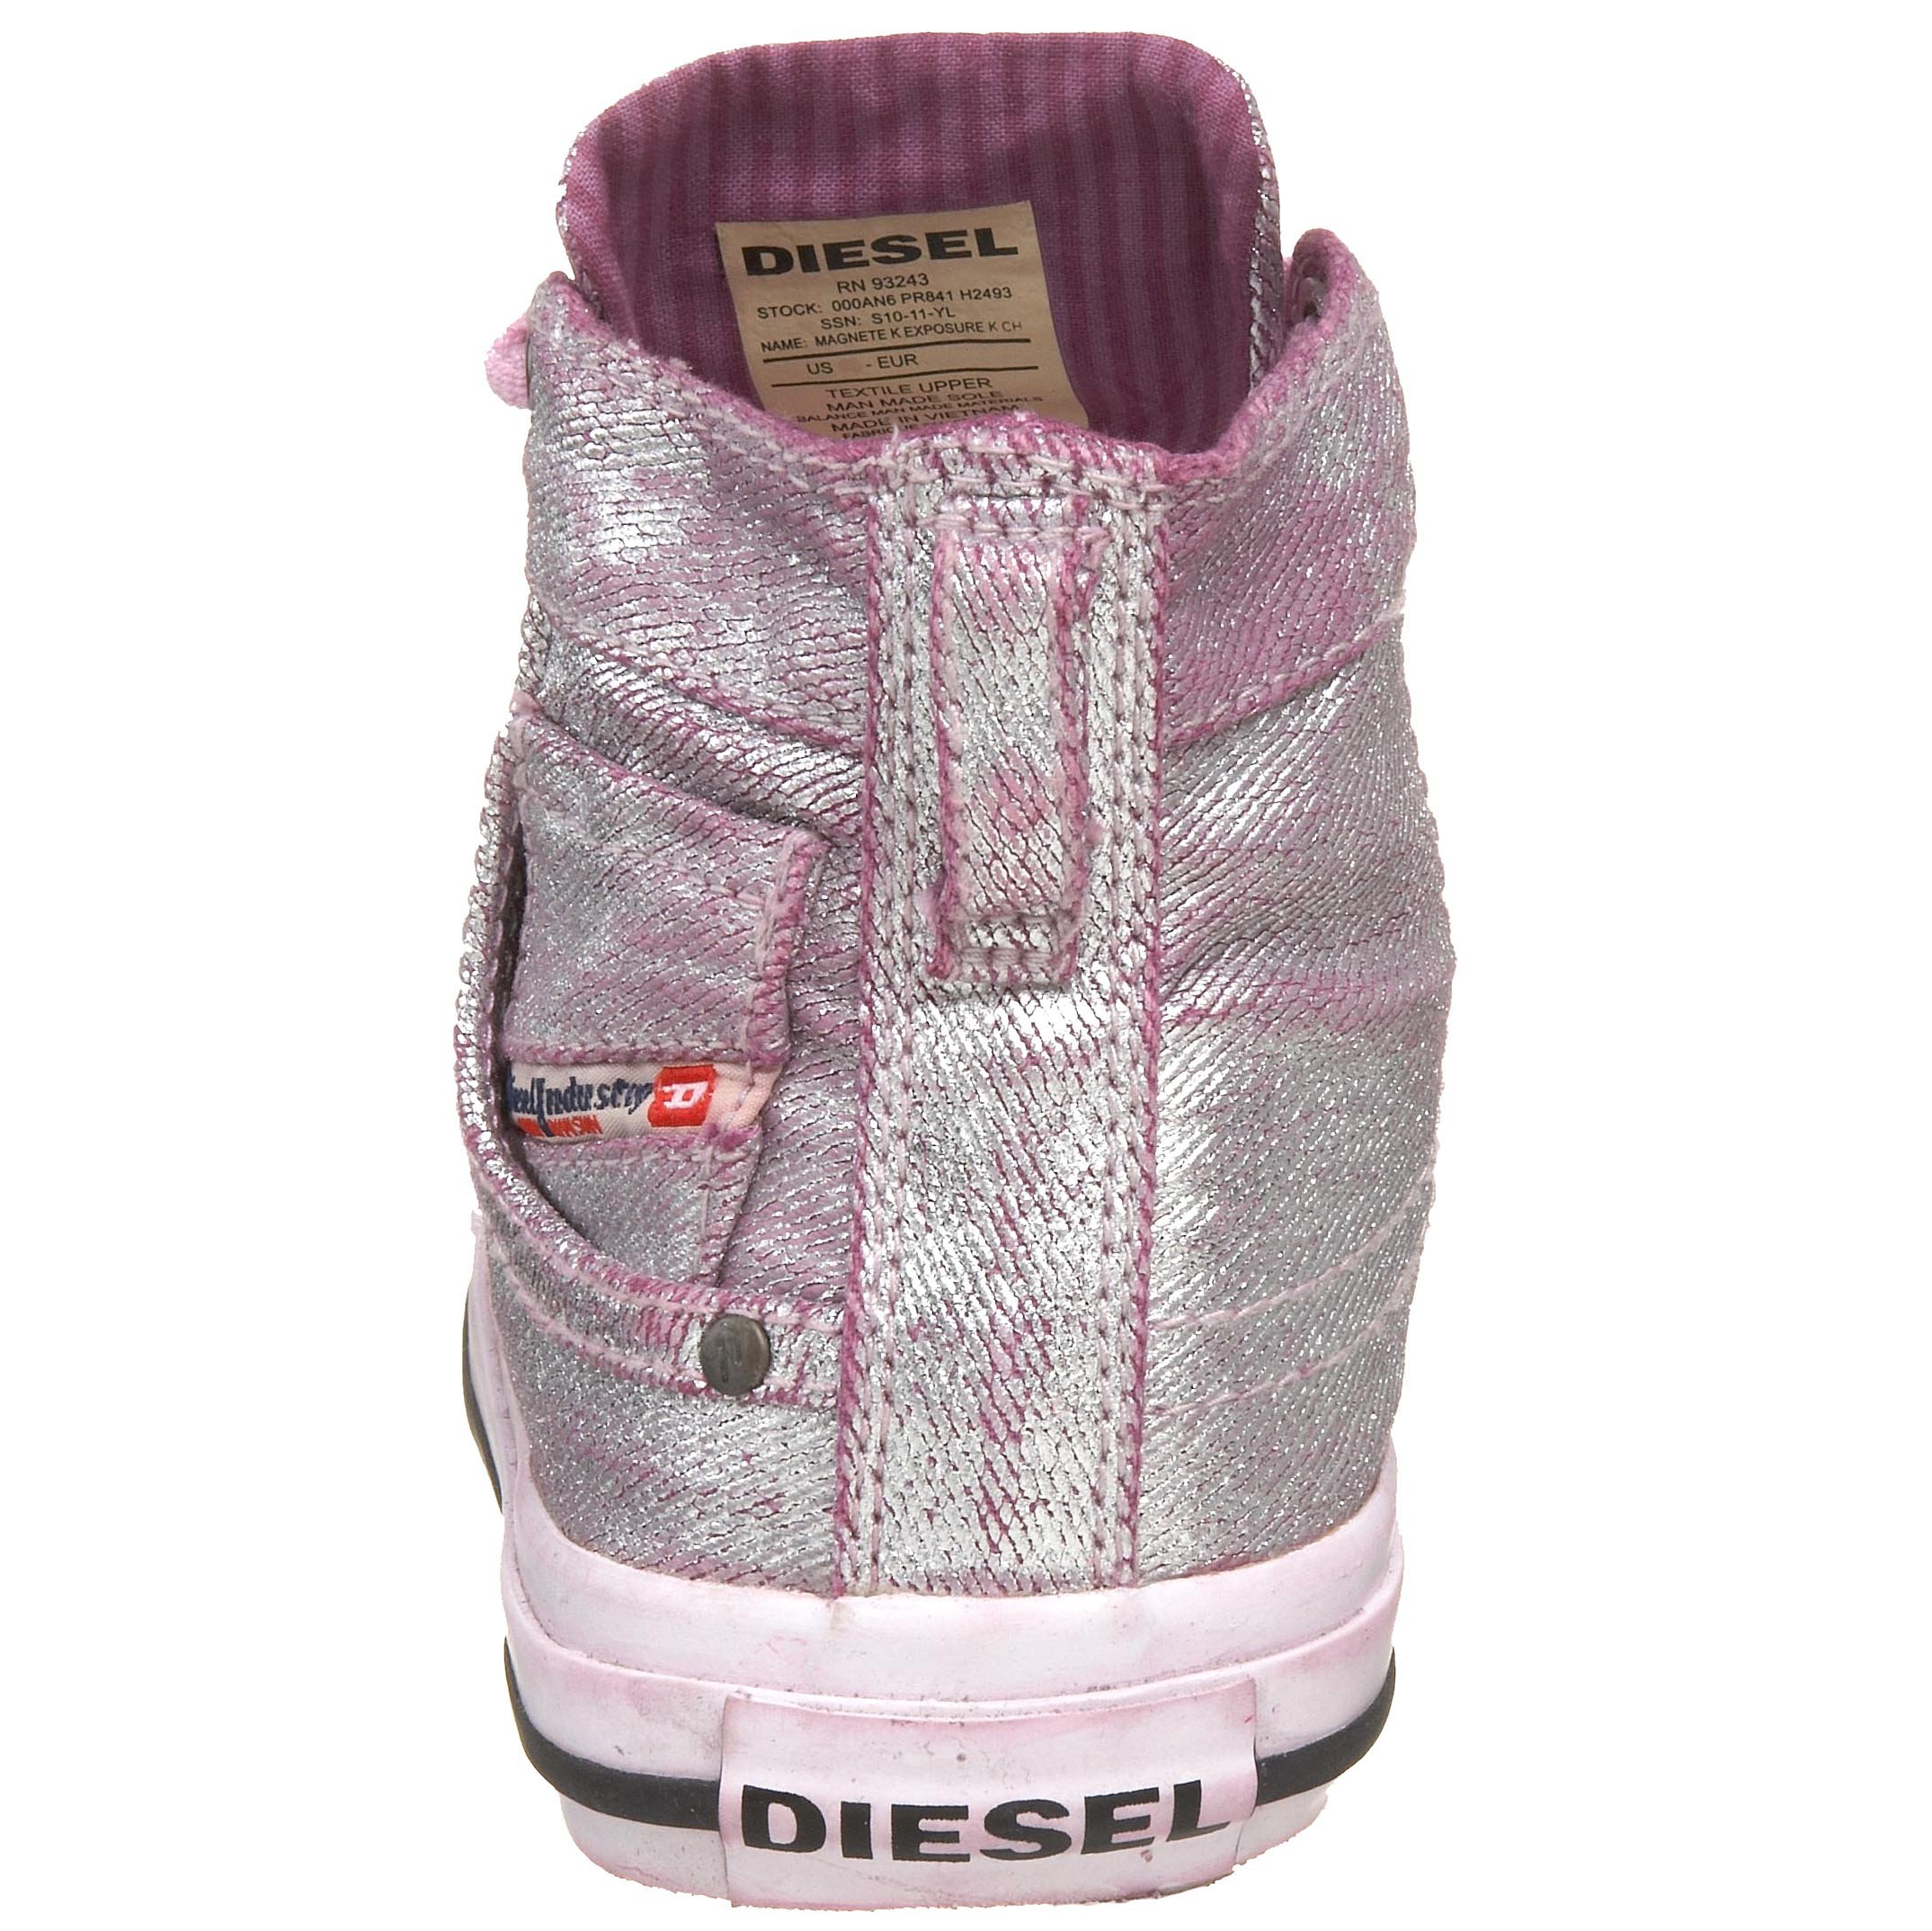 Diesel Toddler/Little Kid Magnete Exposure Sneaker ,Silver/Festiv.Fichsi,3.5 M US Big Kid